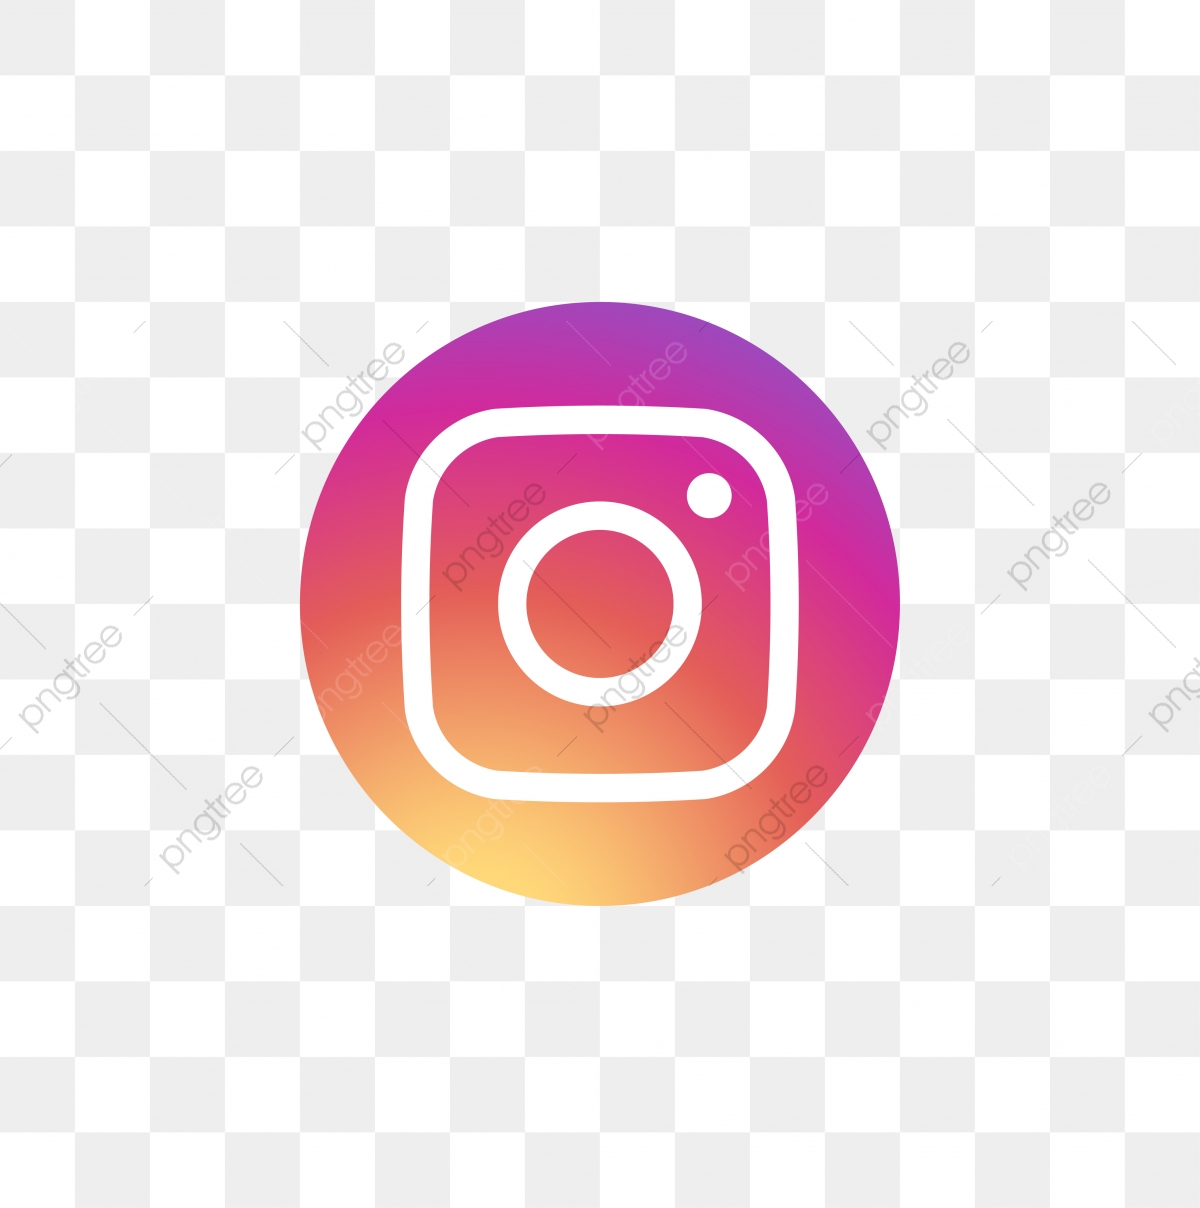 copy and paste instagram symbols